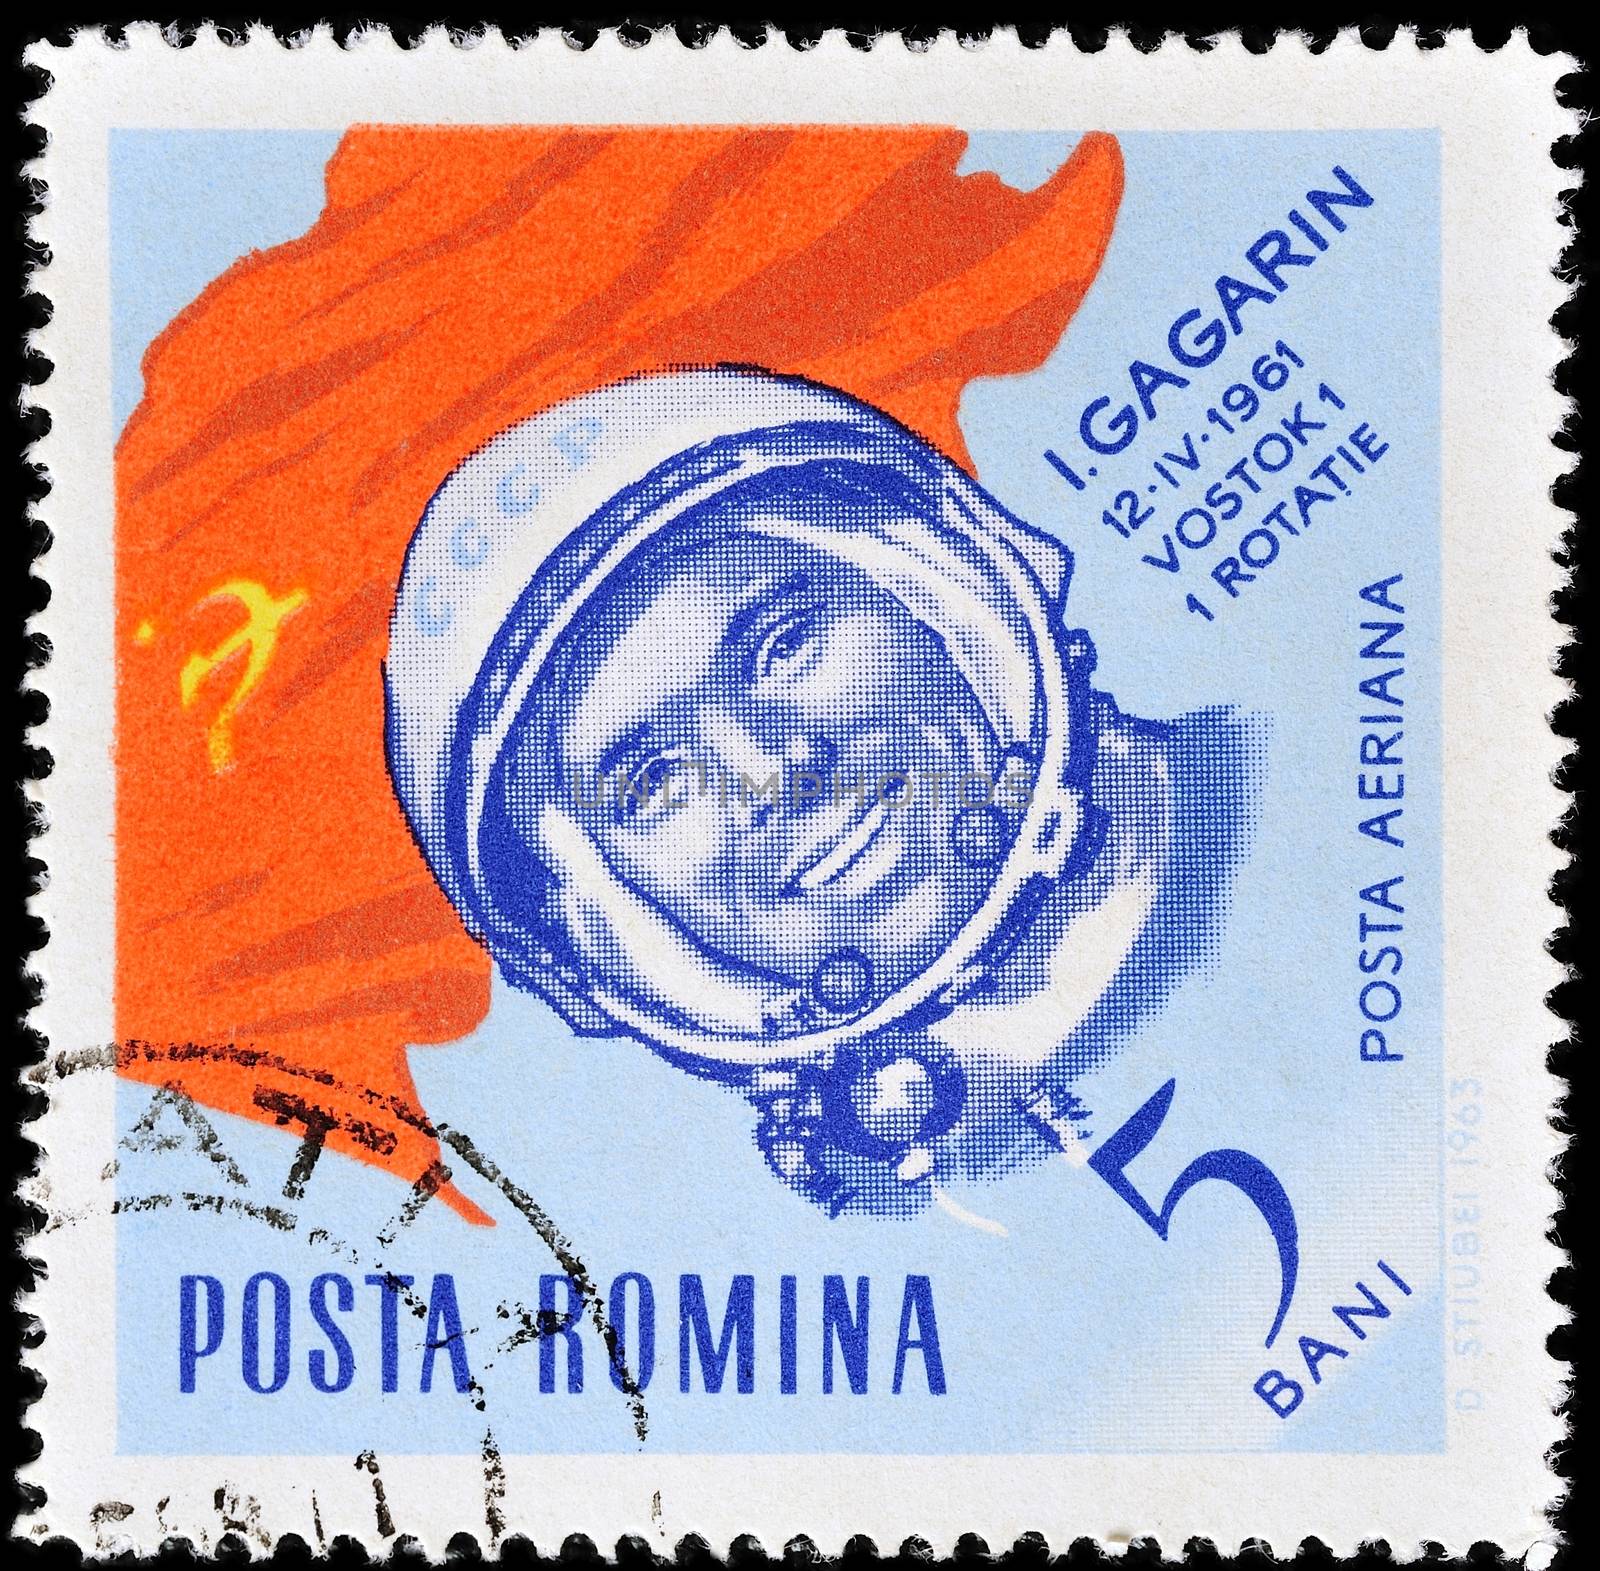 ROMANIA - CIRCA 1964: Postage stamp printed in Romania shows the first cosmonaut Yuri Gagarin, circa 1964